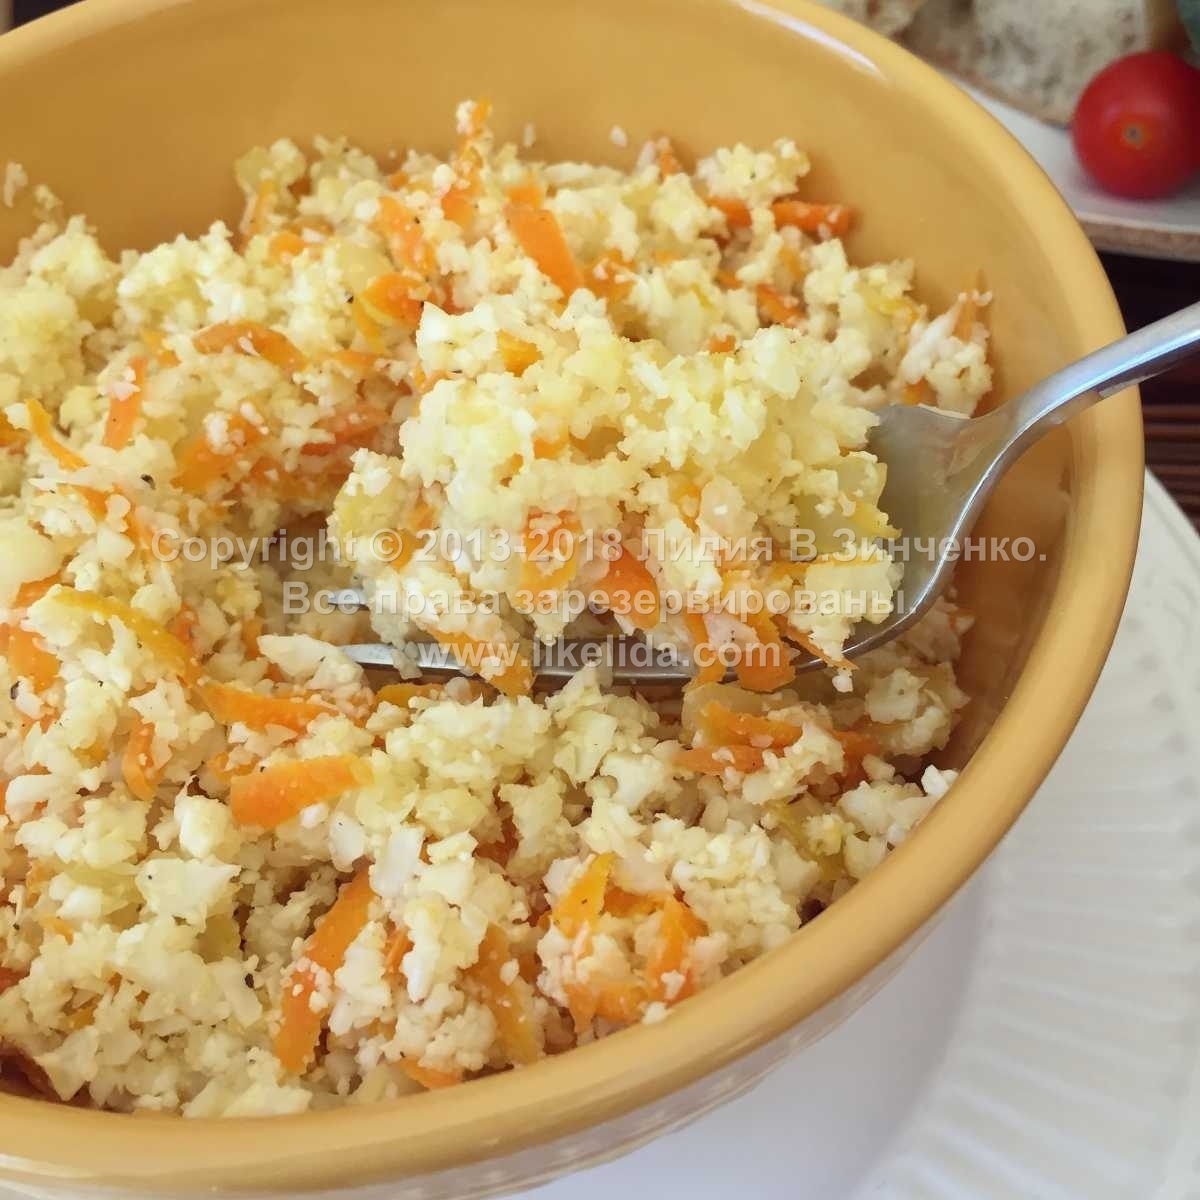 Рис без моркови. Рис с морковью и луком. Рис с жареным луком и морковью. Запеченный рис с луком и морковкой. Жареный рис без моркови.